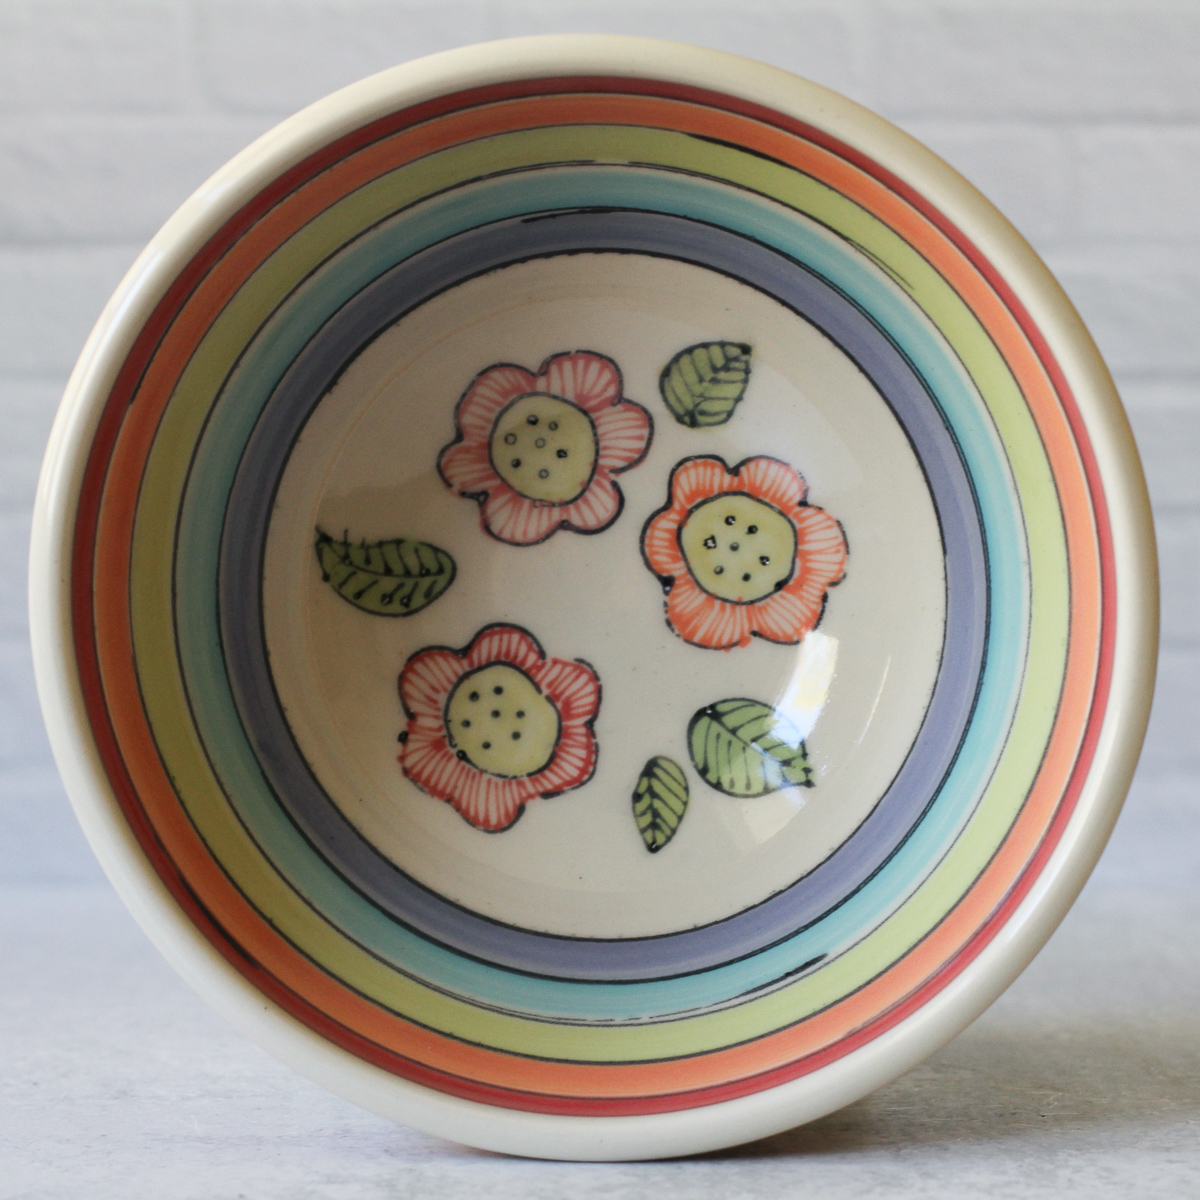 Button Flower serving bowl, 9-inch